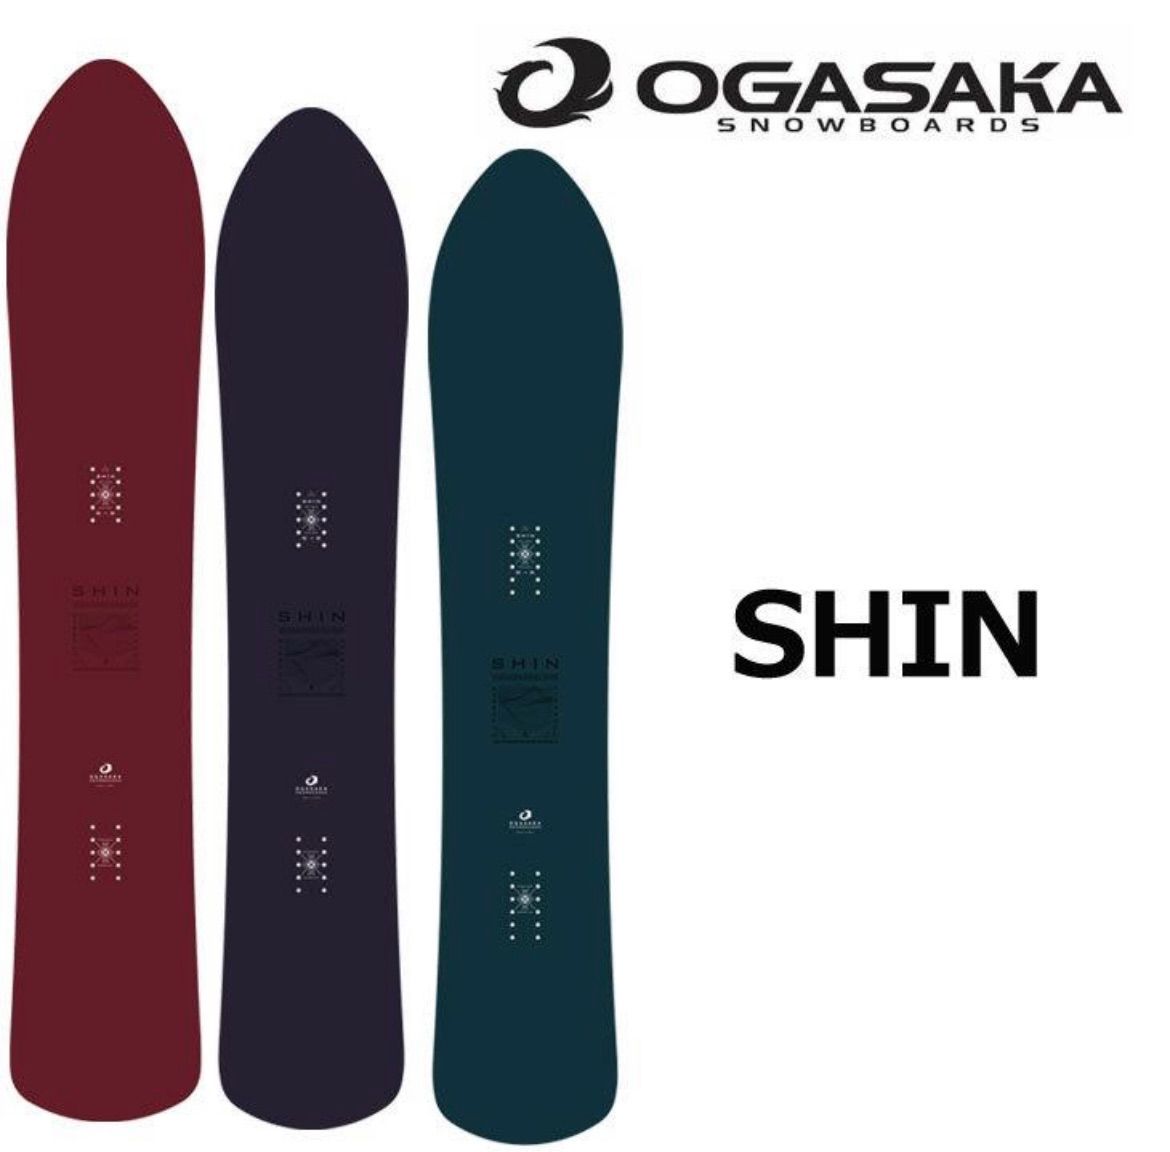 21-22 ogasaka shin 156 - atlacasaazul.com